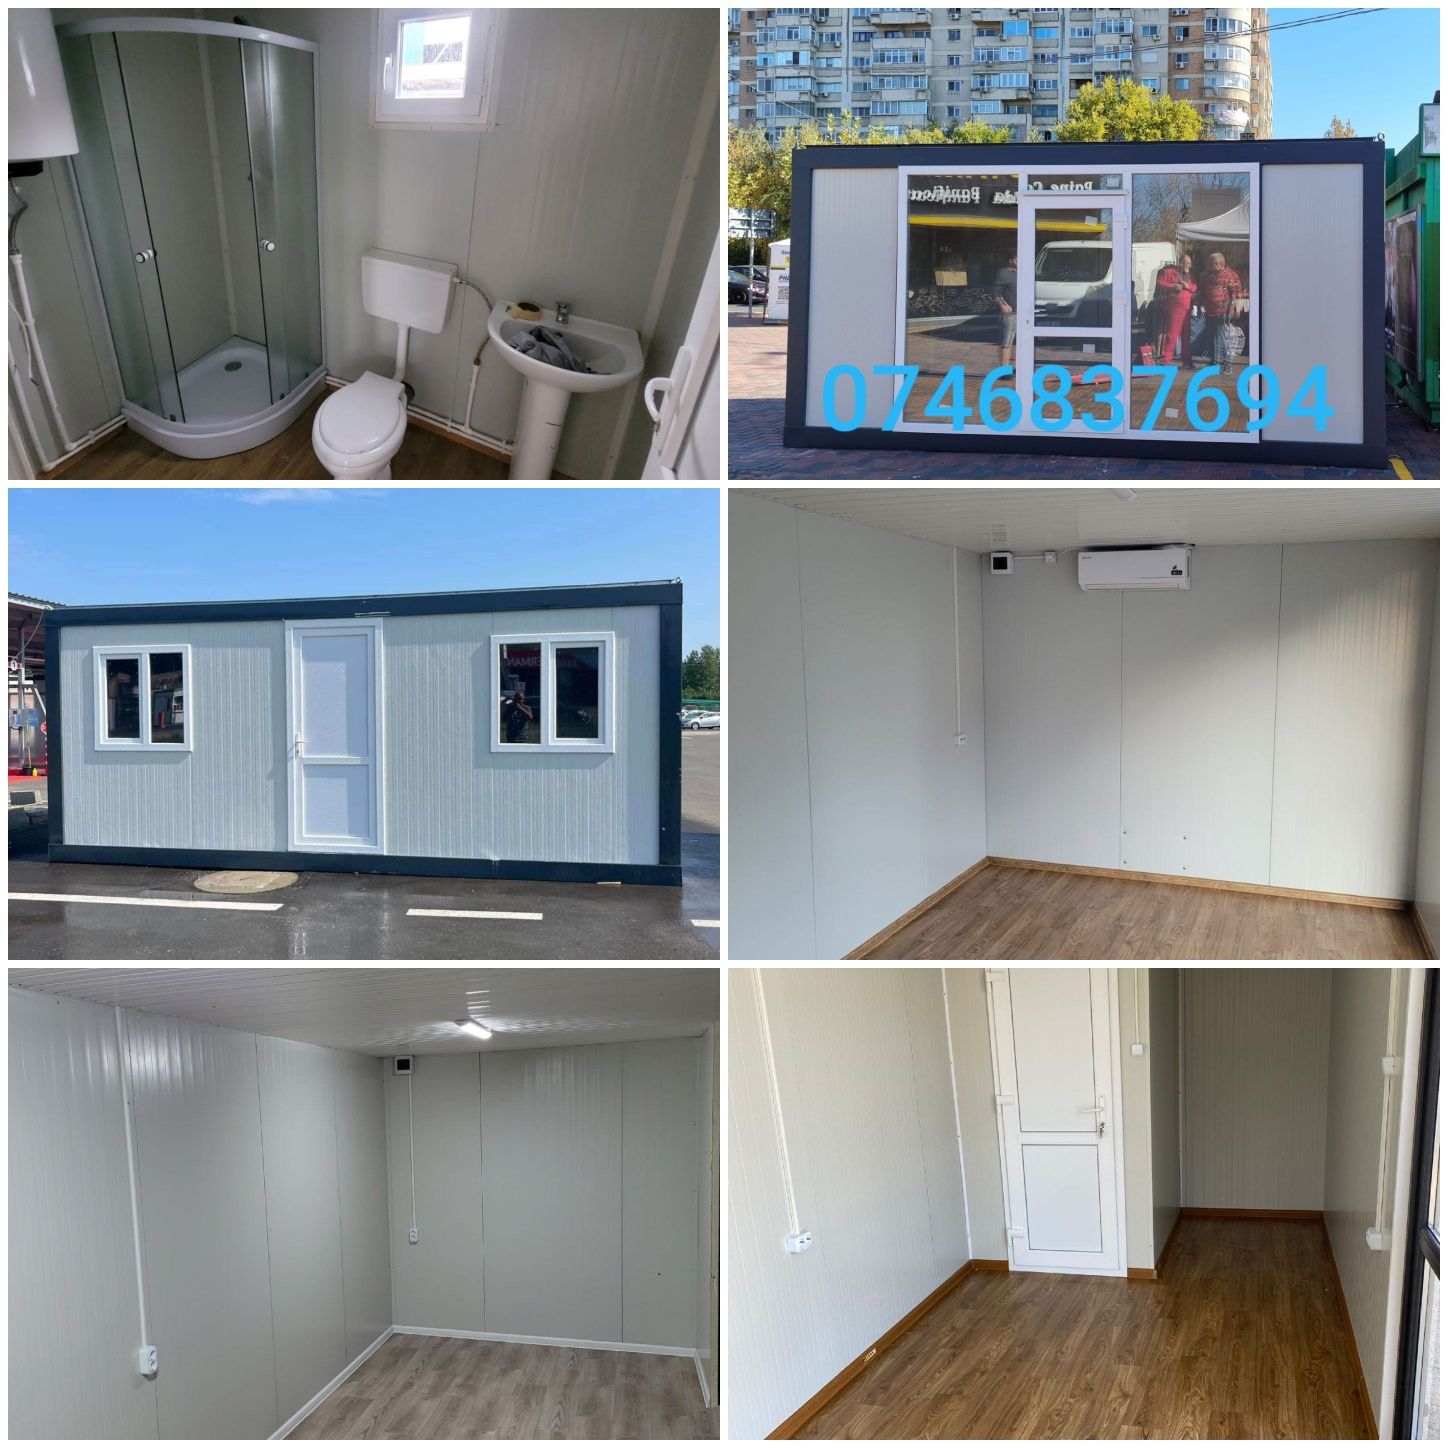 Vand container modular pentru birou șantier,  vestiar, grup sanitar